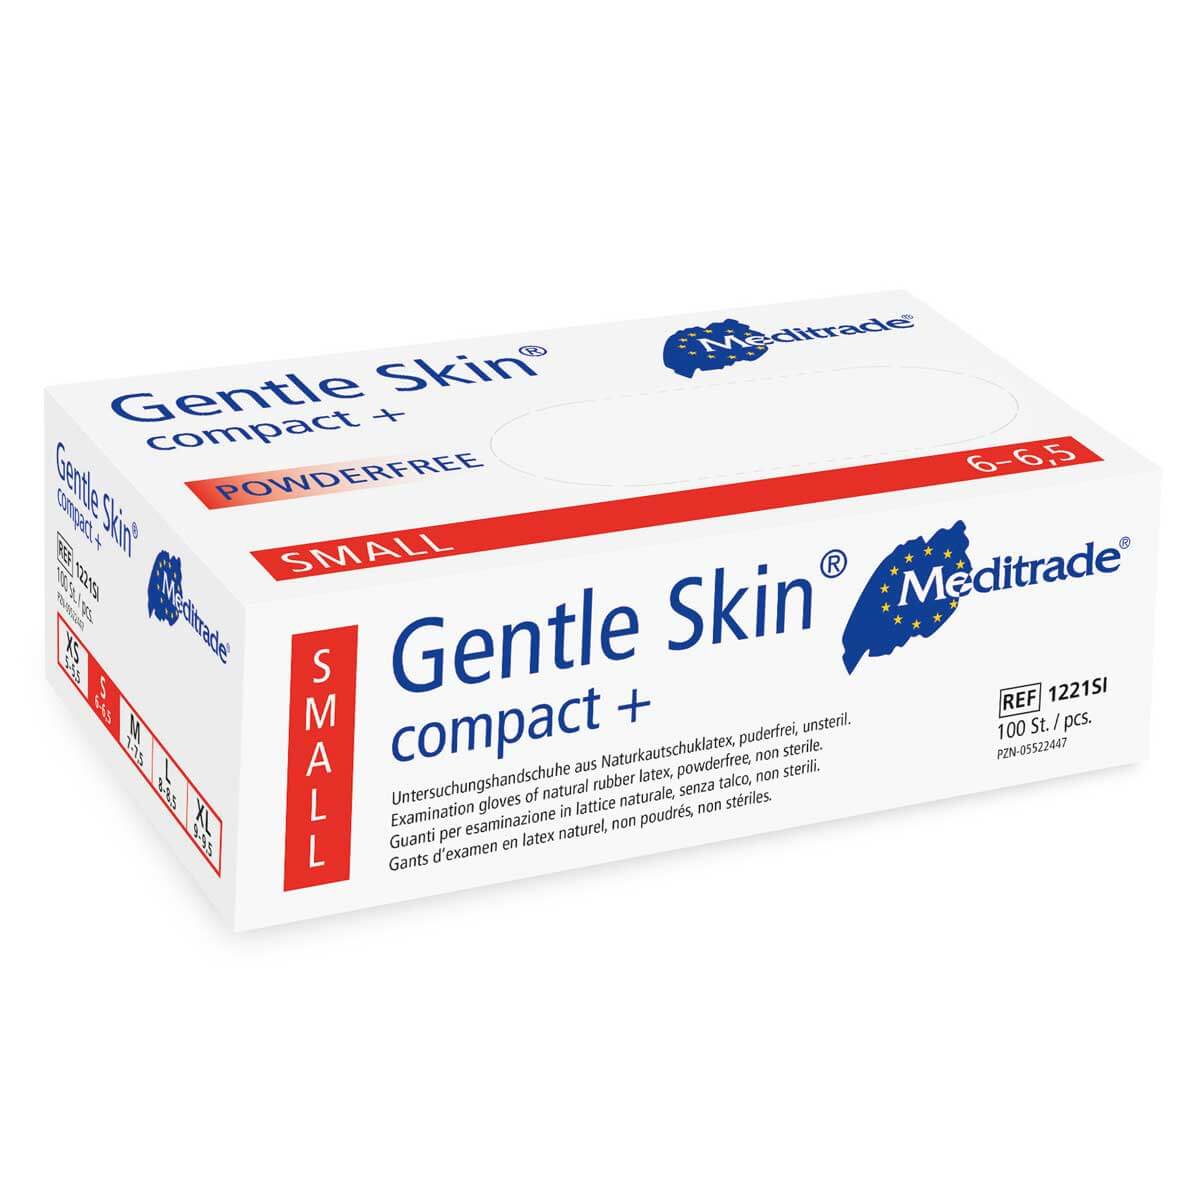 Gentle Skin® compact Untersuchungshandschuhe - Packung à 100 Stück